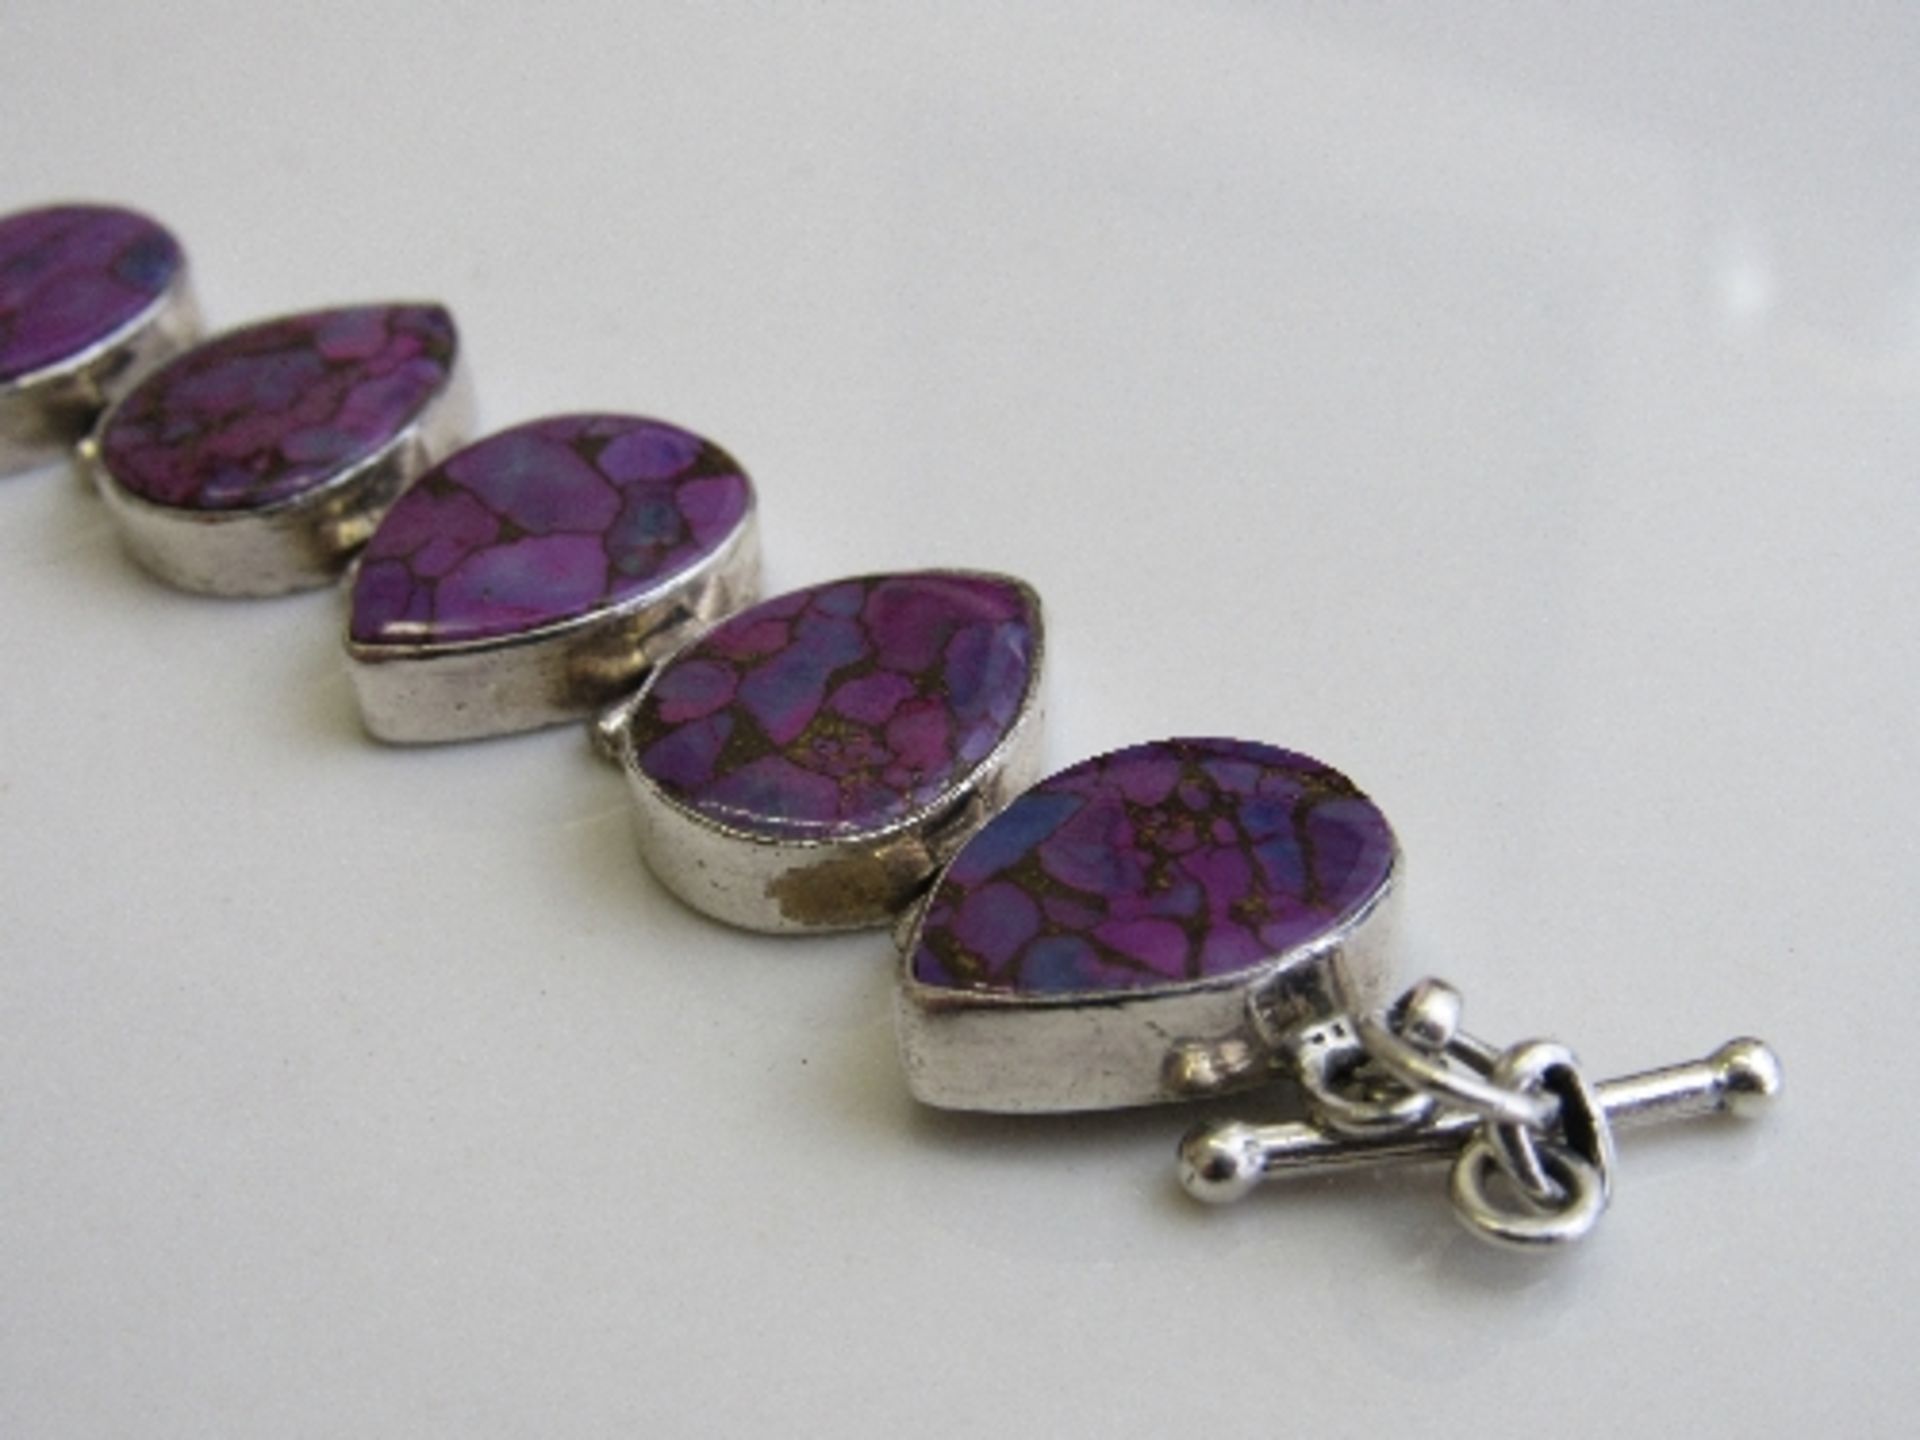 Silver hallmarked bracelet with tear drop purple stones. Estimate £20-30 - Image 3 of 3